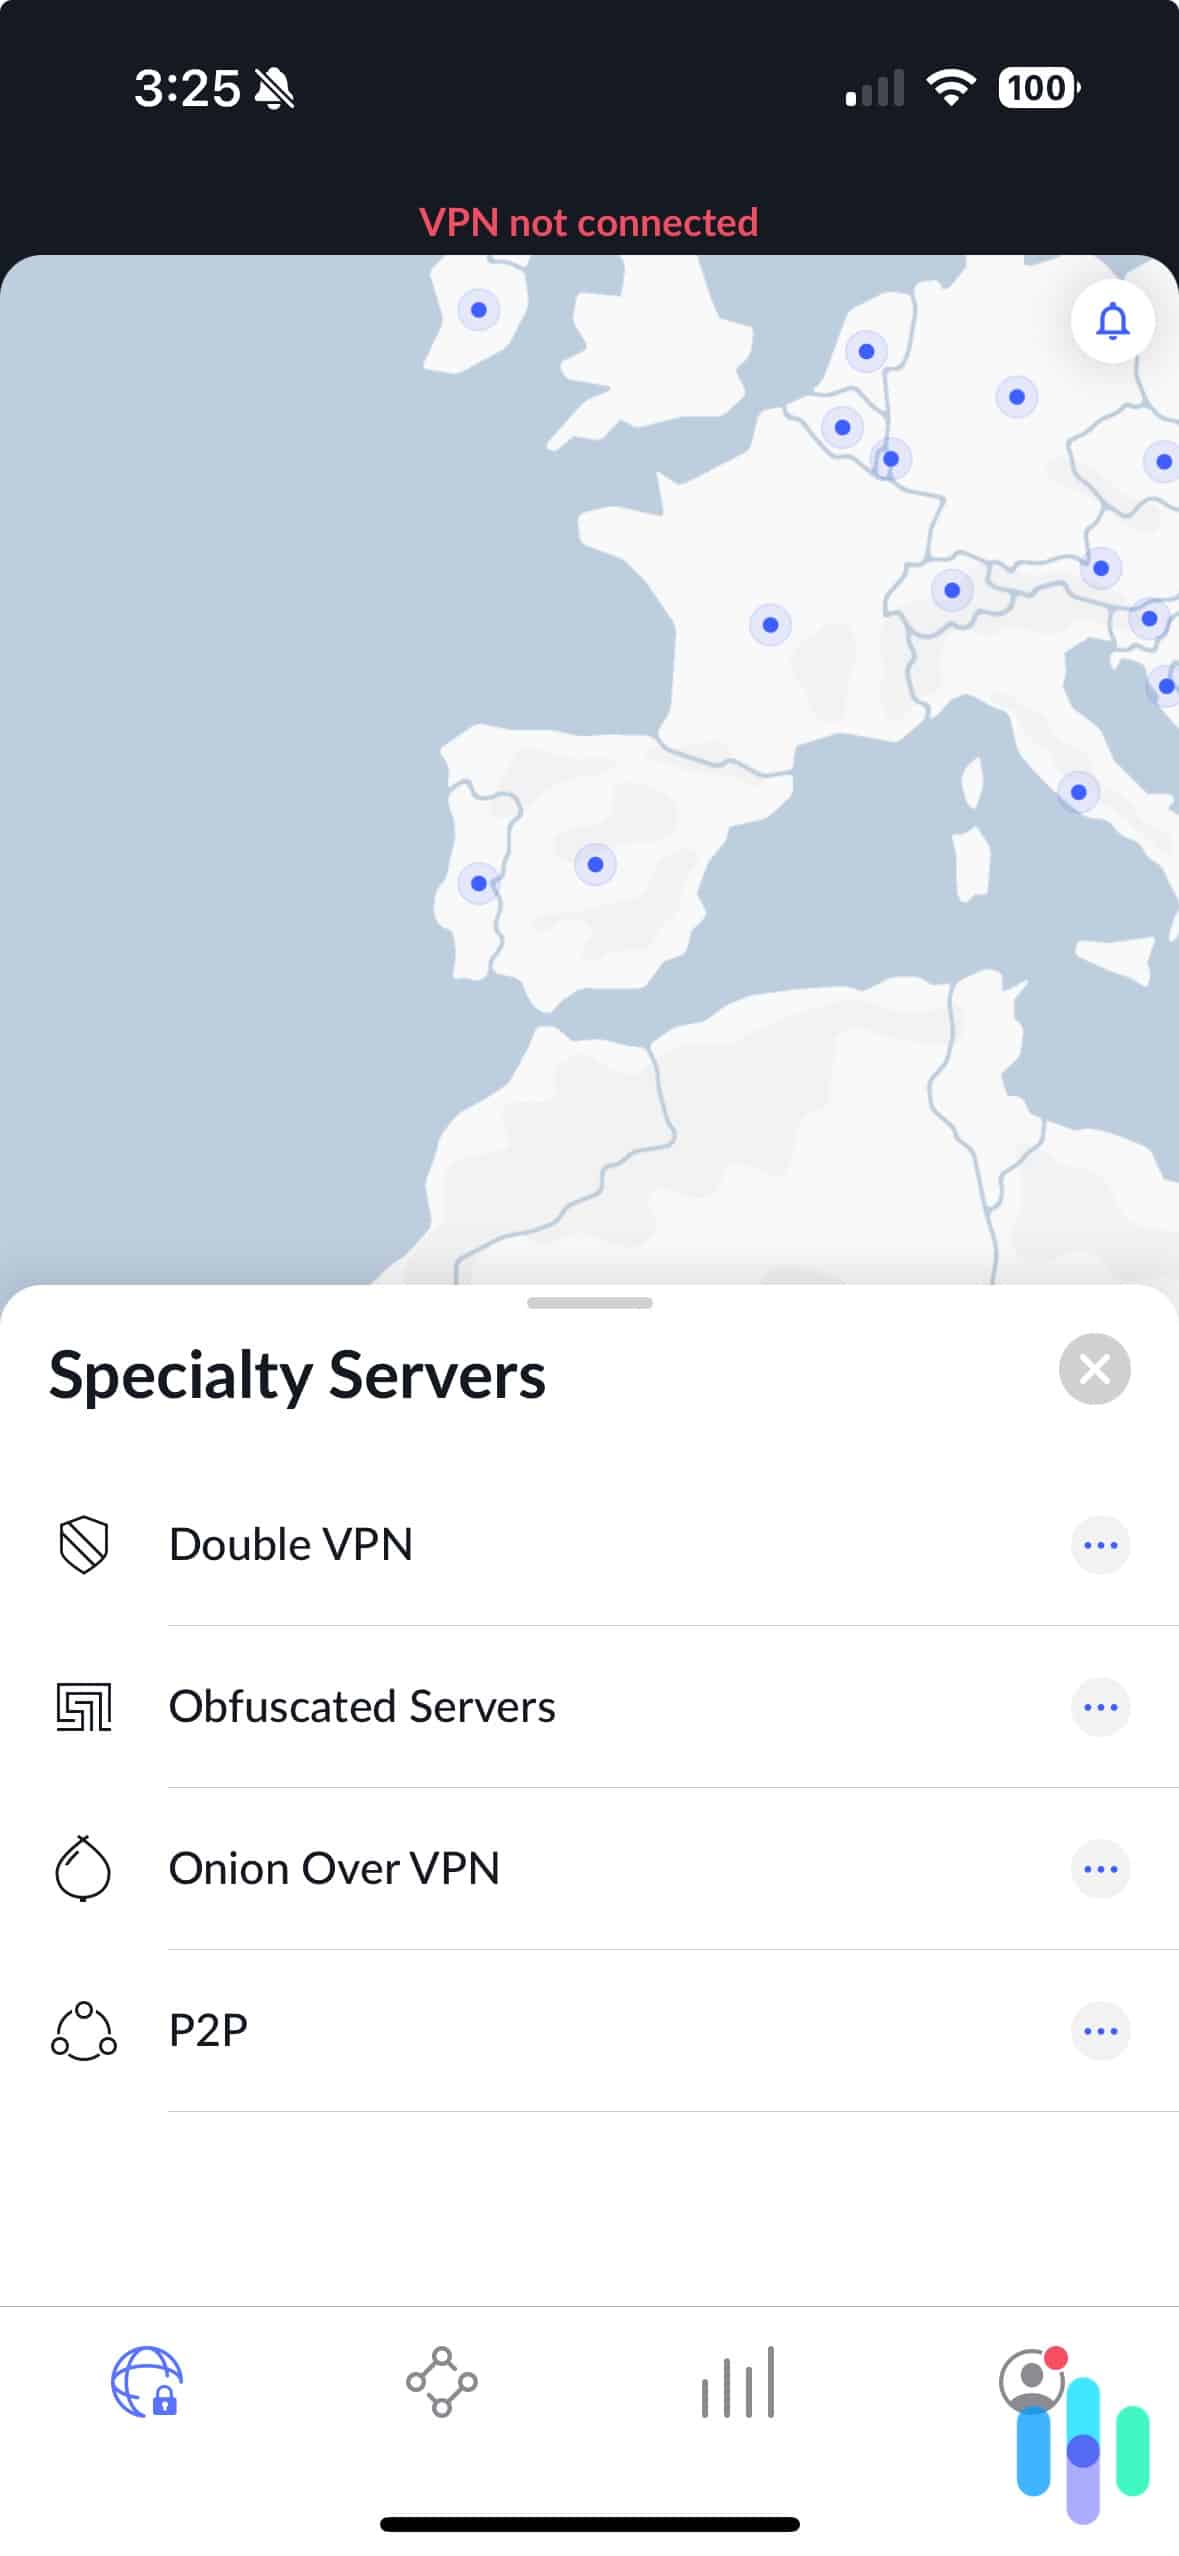 NordVPN's Speciality Server Options